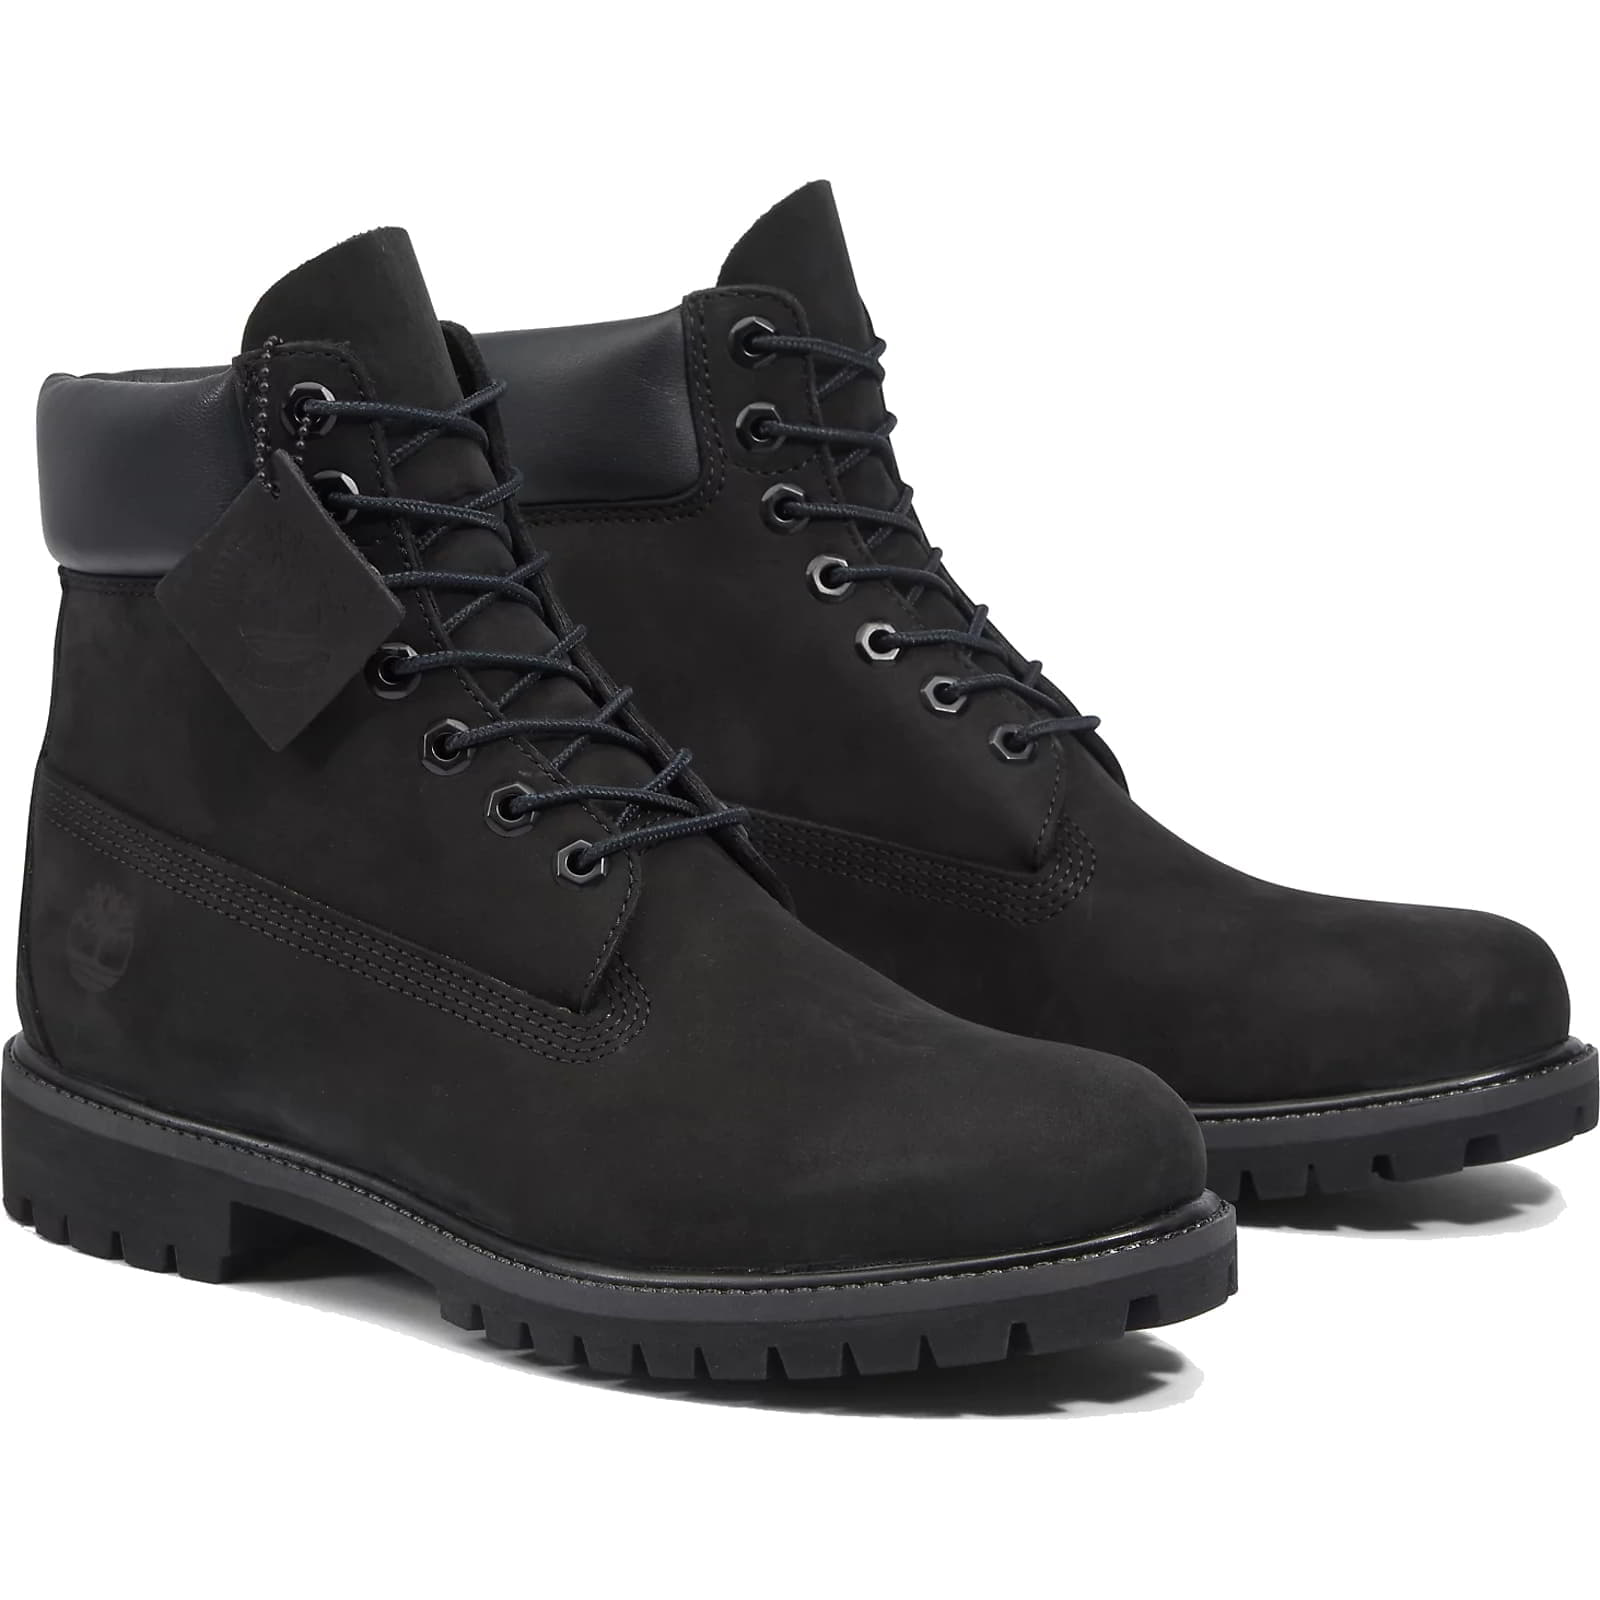 Timberland Men's 6 Inch Premium Black Classic Wide Fit Waterproof Boots - UK 7